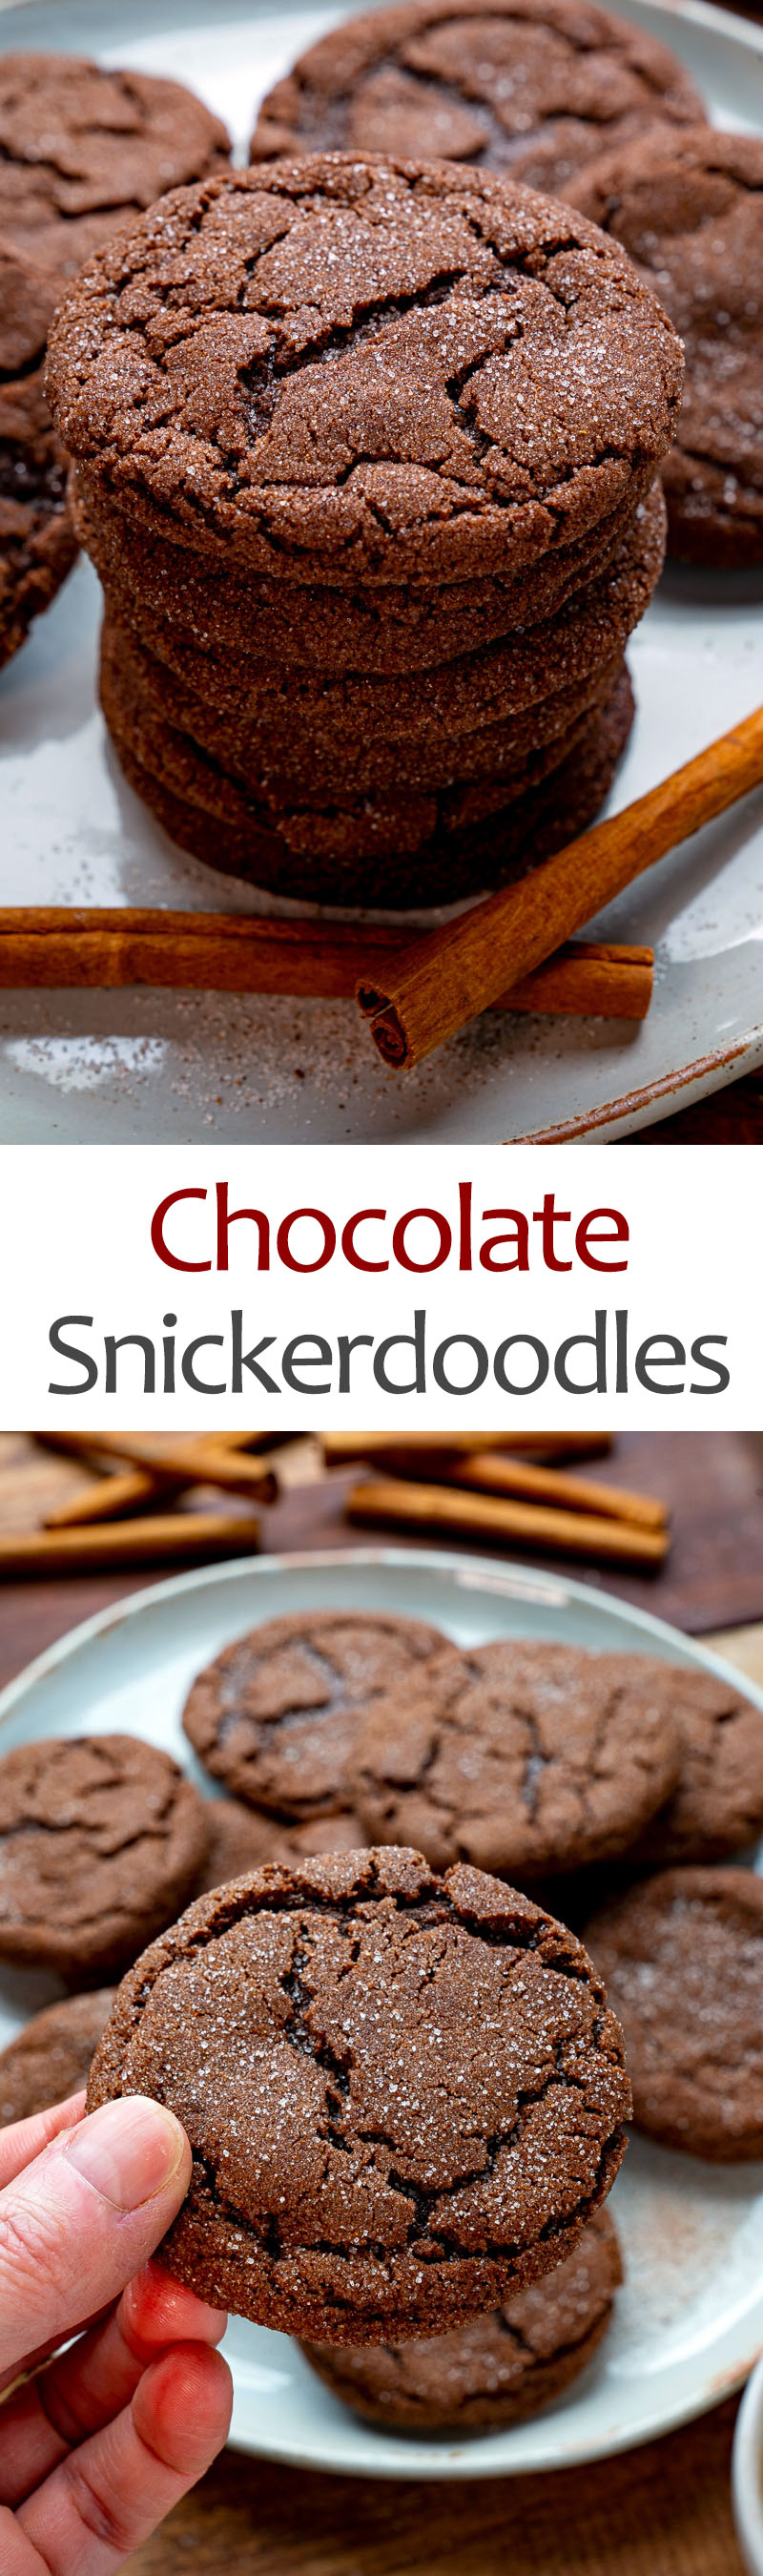 Chocolate Snickerdoodles